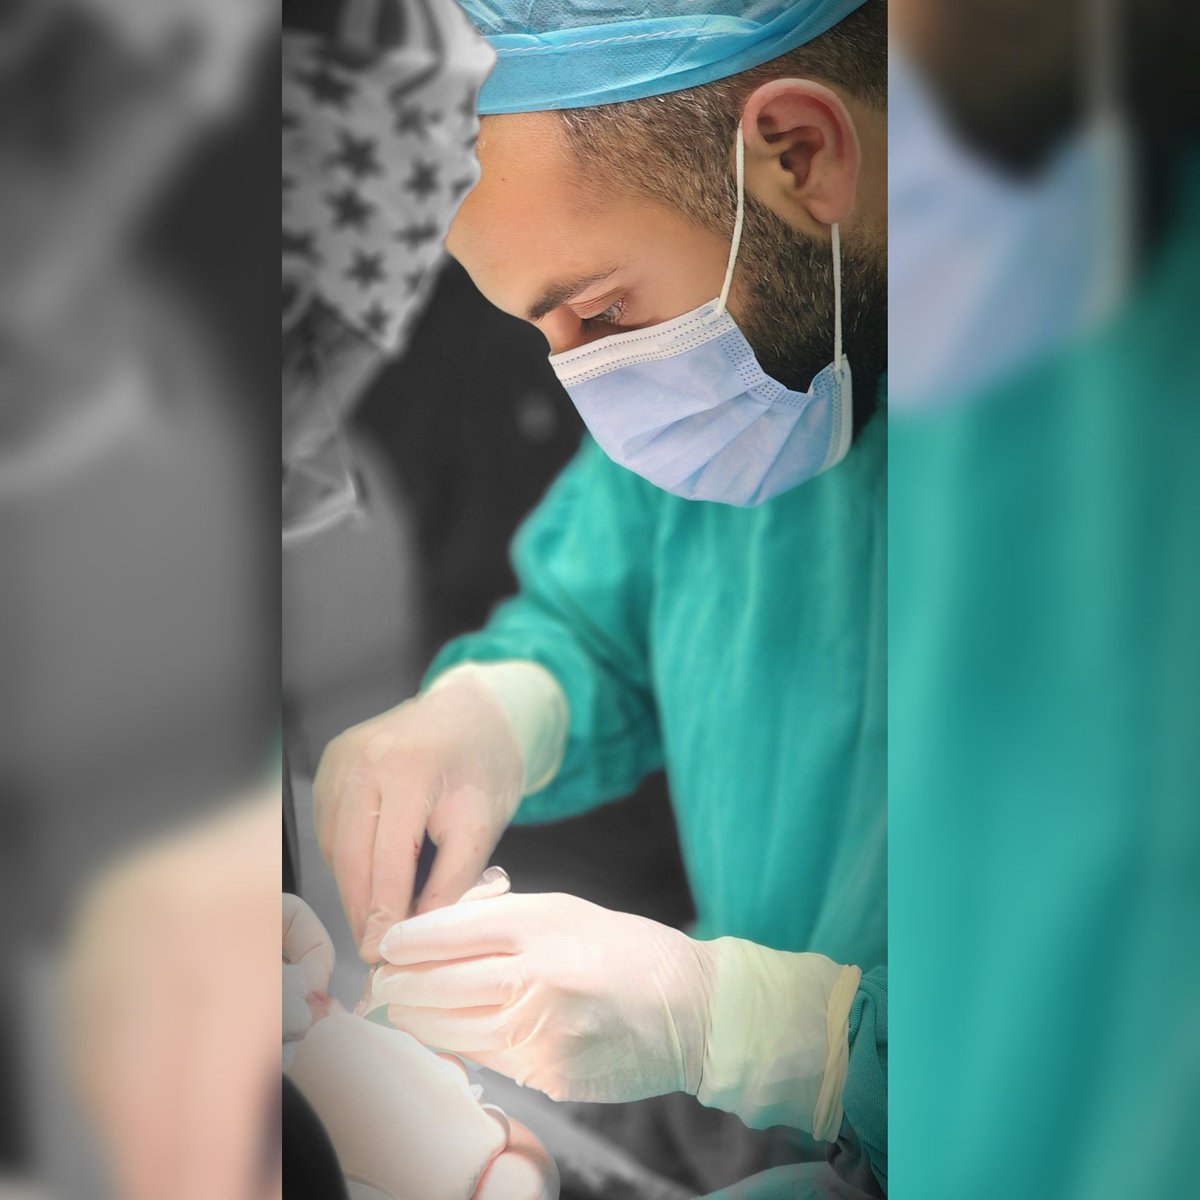 The best is yet to come 🎨
#NewProfilePic
#plasticsurgery  #plasticsurgeon #Operation